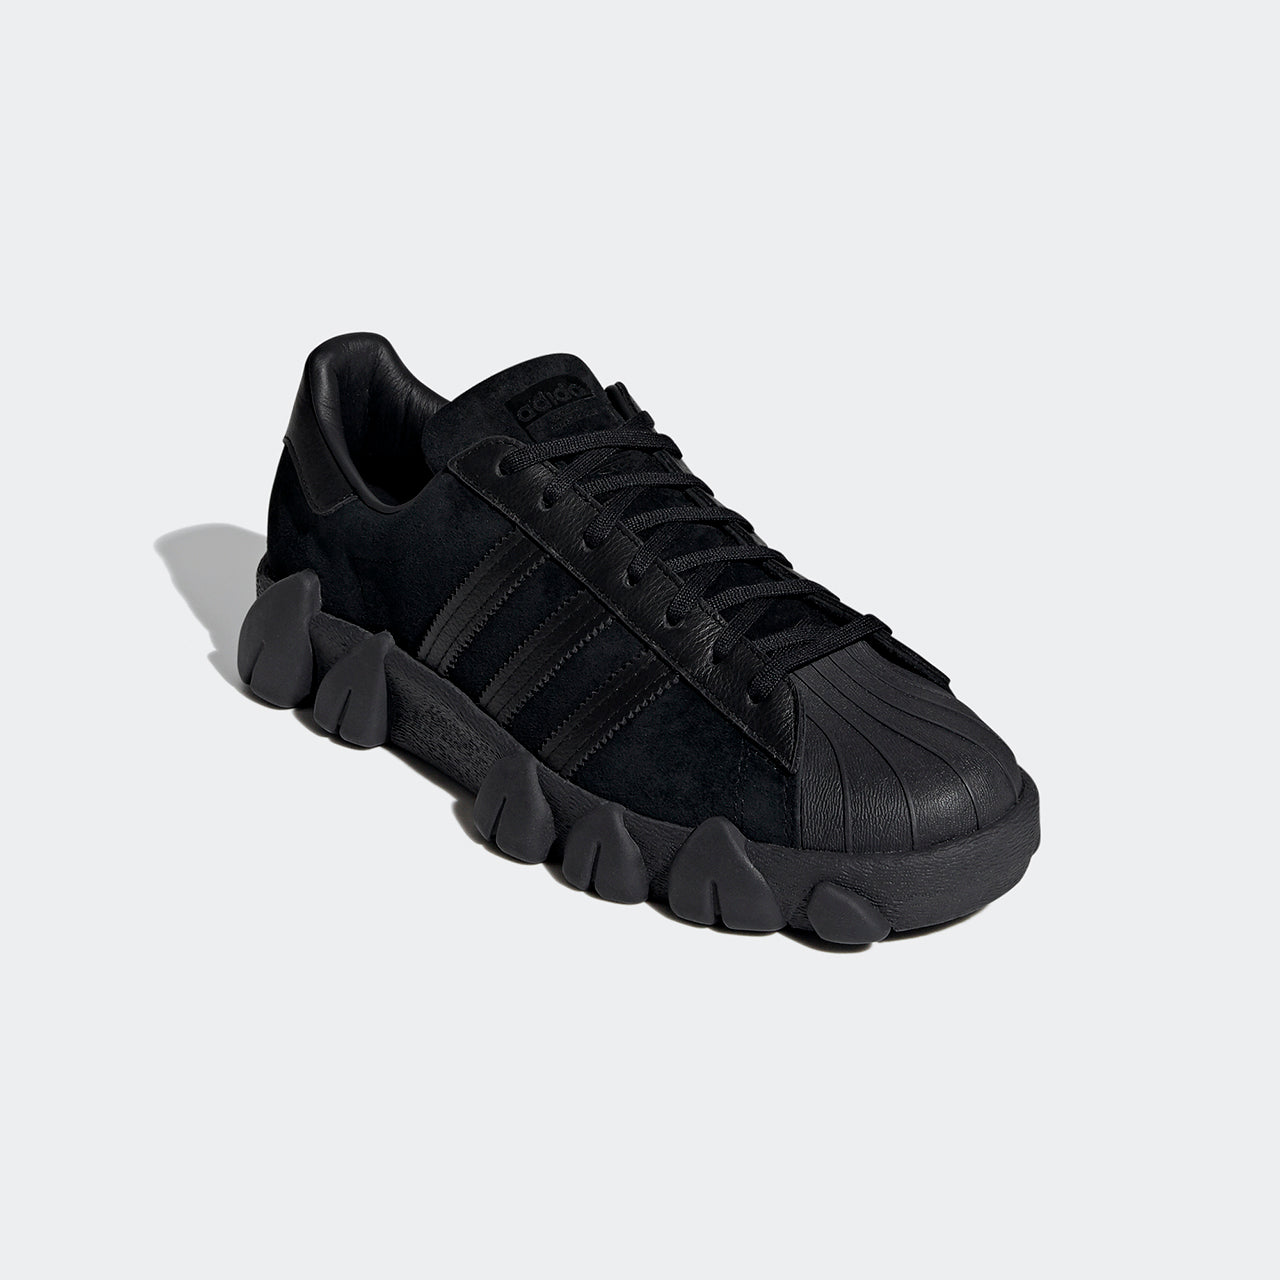 adidas x angel chen SUPERSTAR80S black sneaker